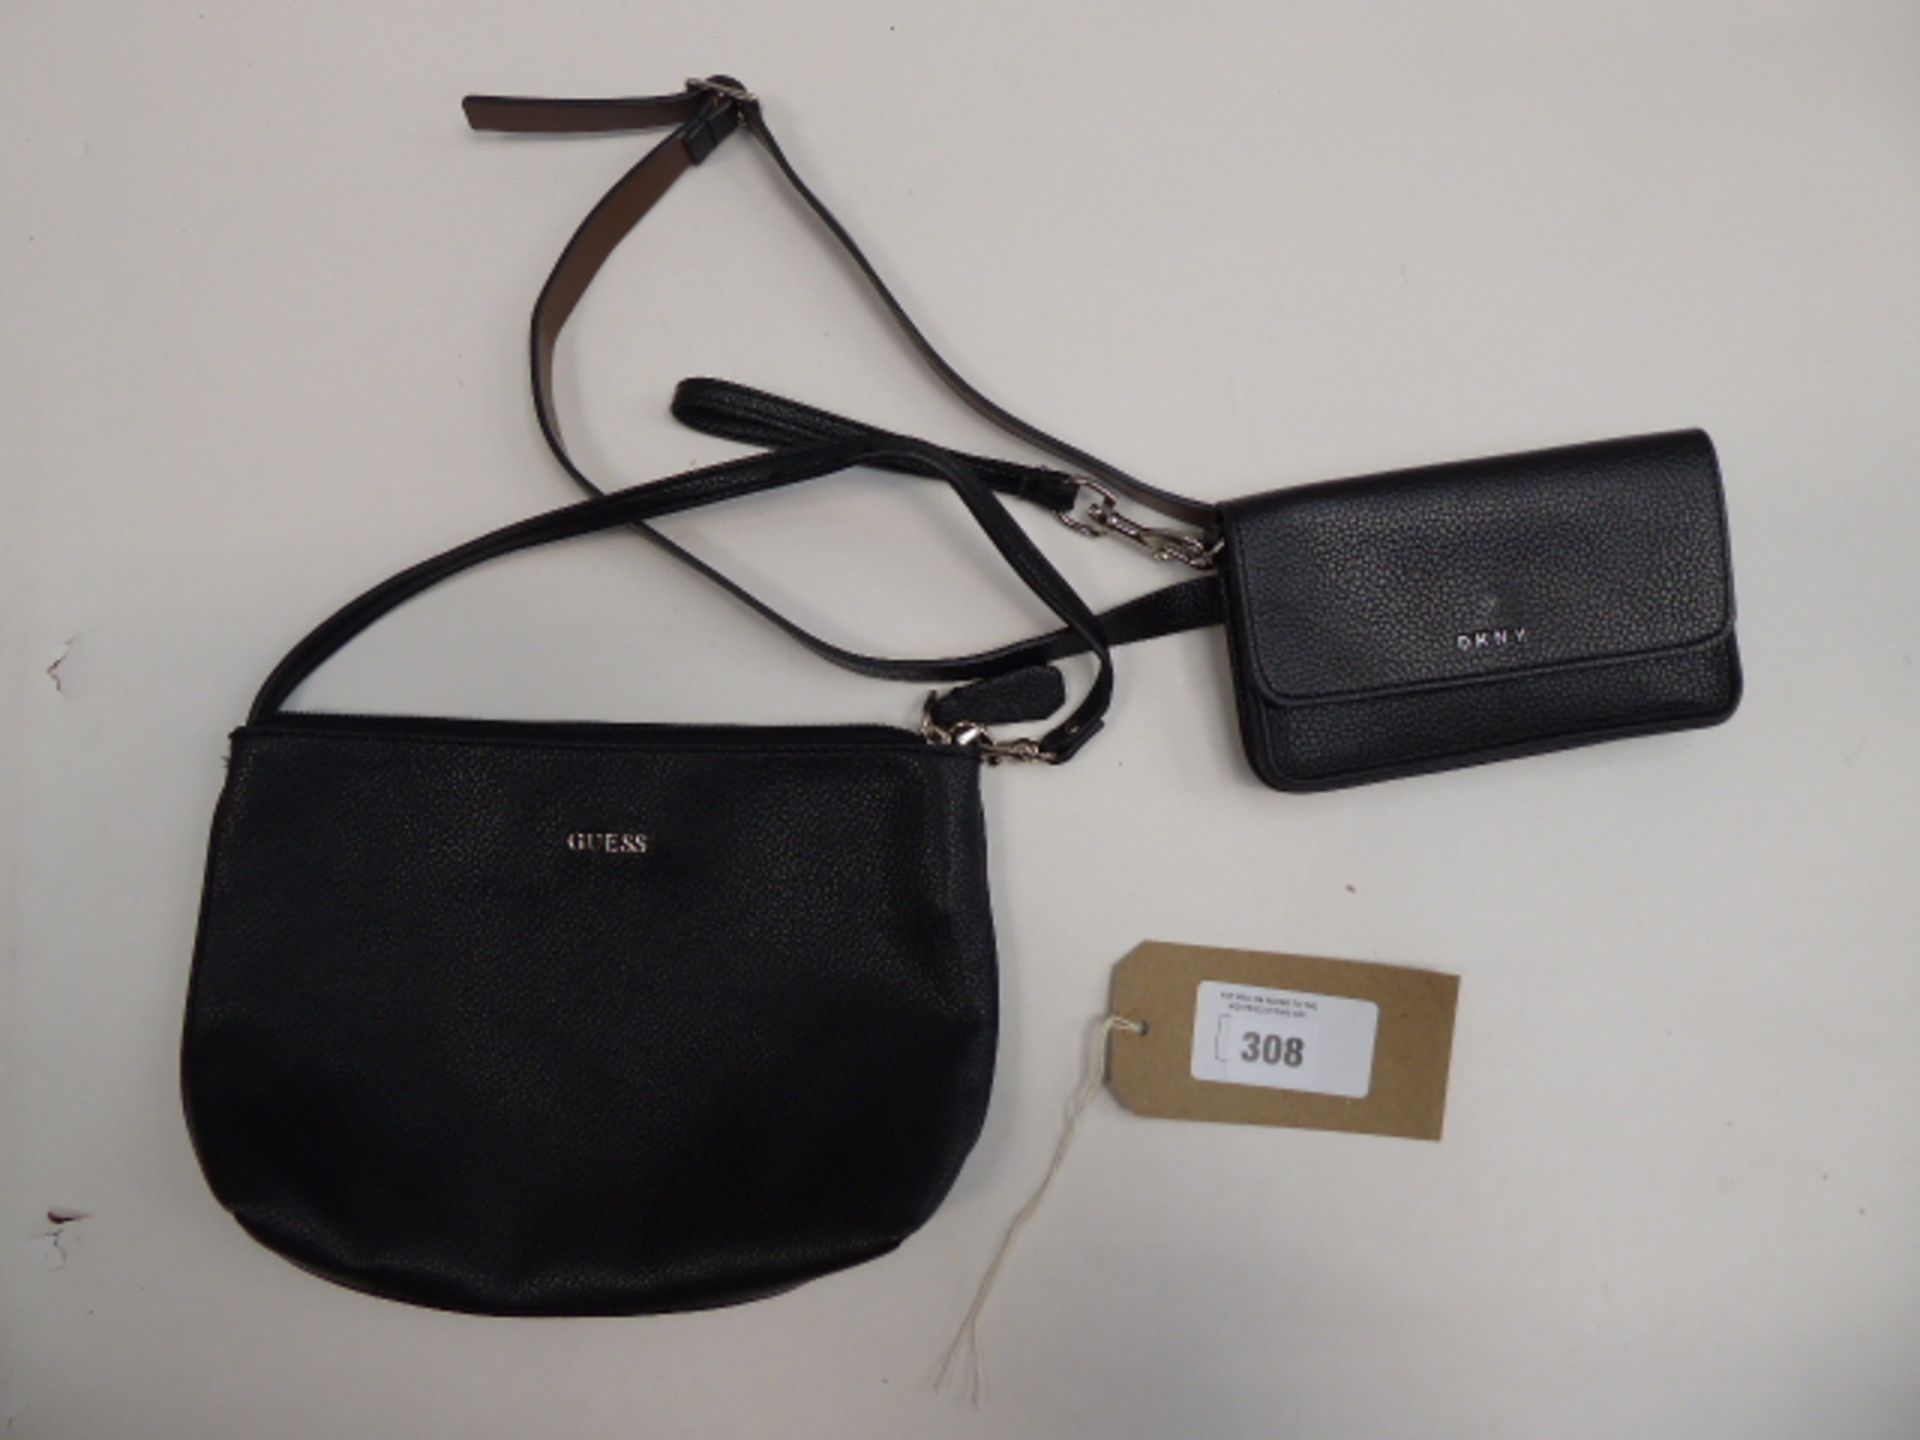 Guess black handbag (used) and DKNY black belt bag (used)